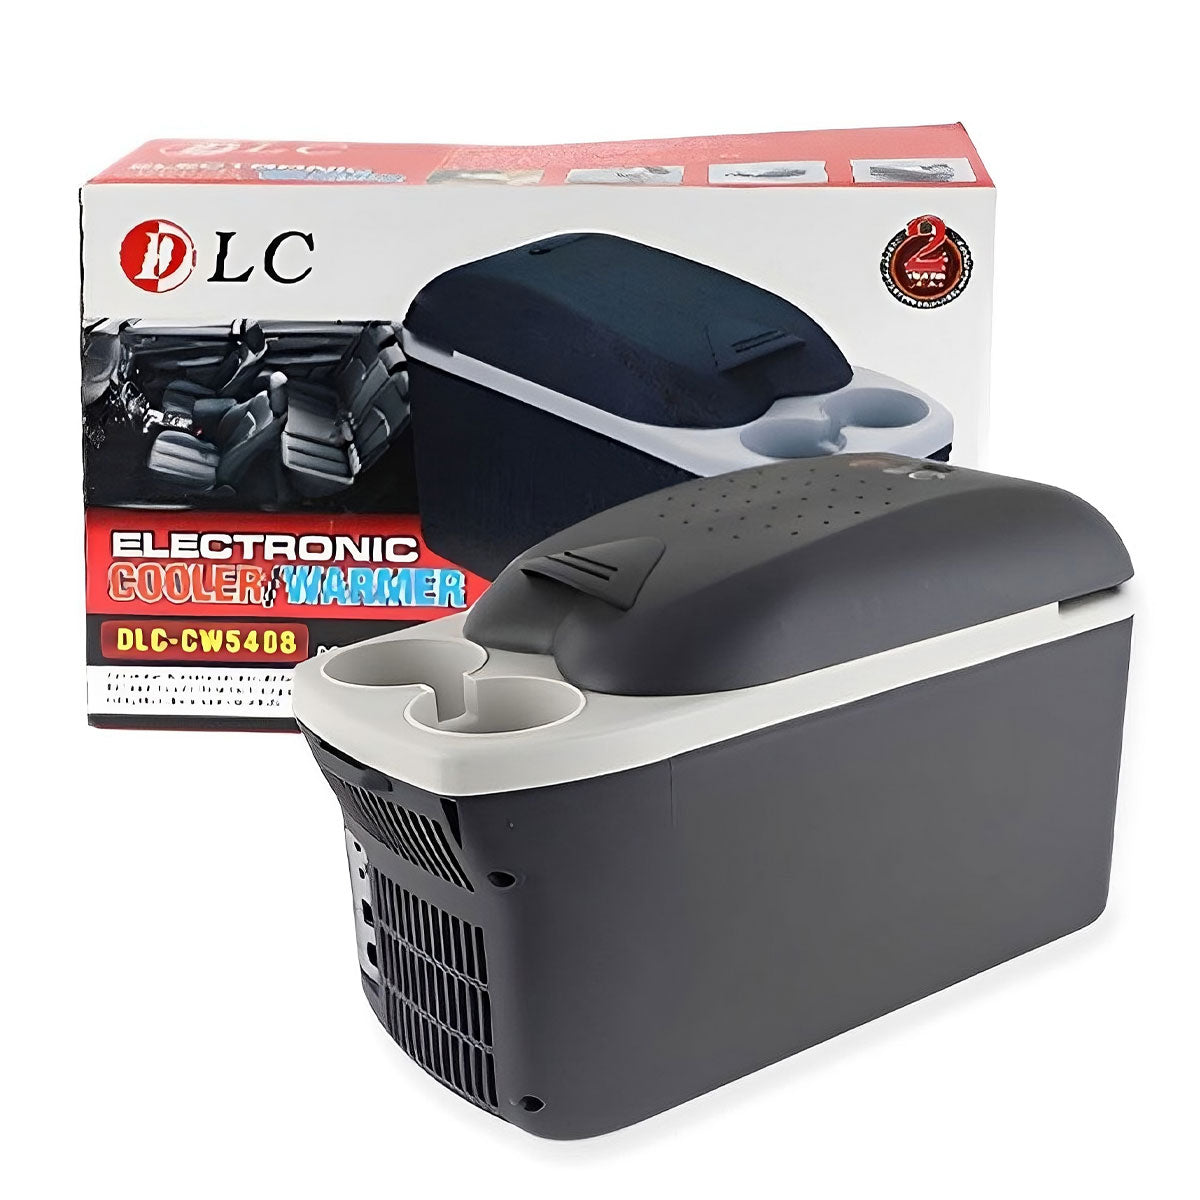 DLC Electronic Cooler/Warmer 8 Liters